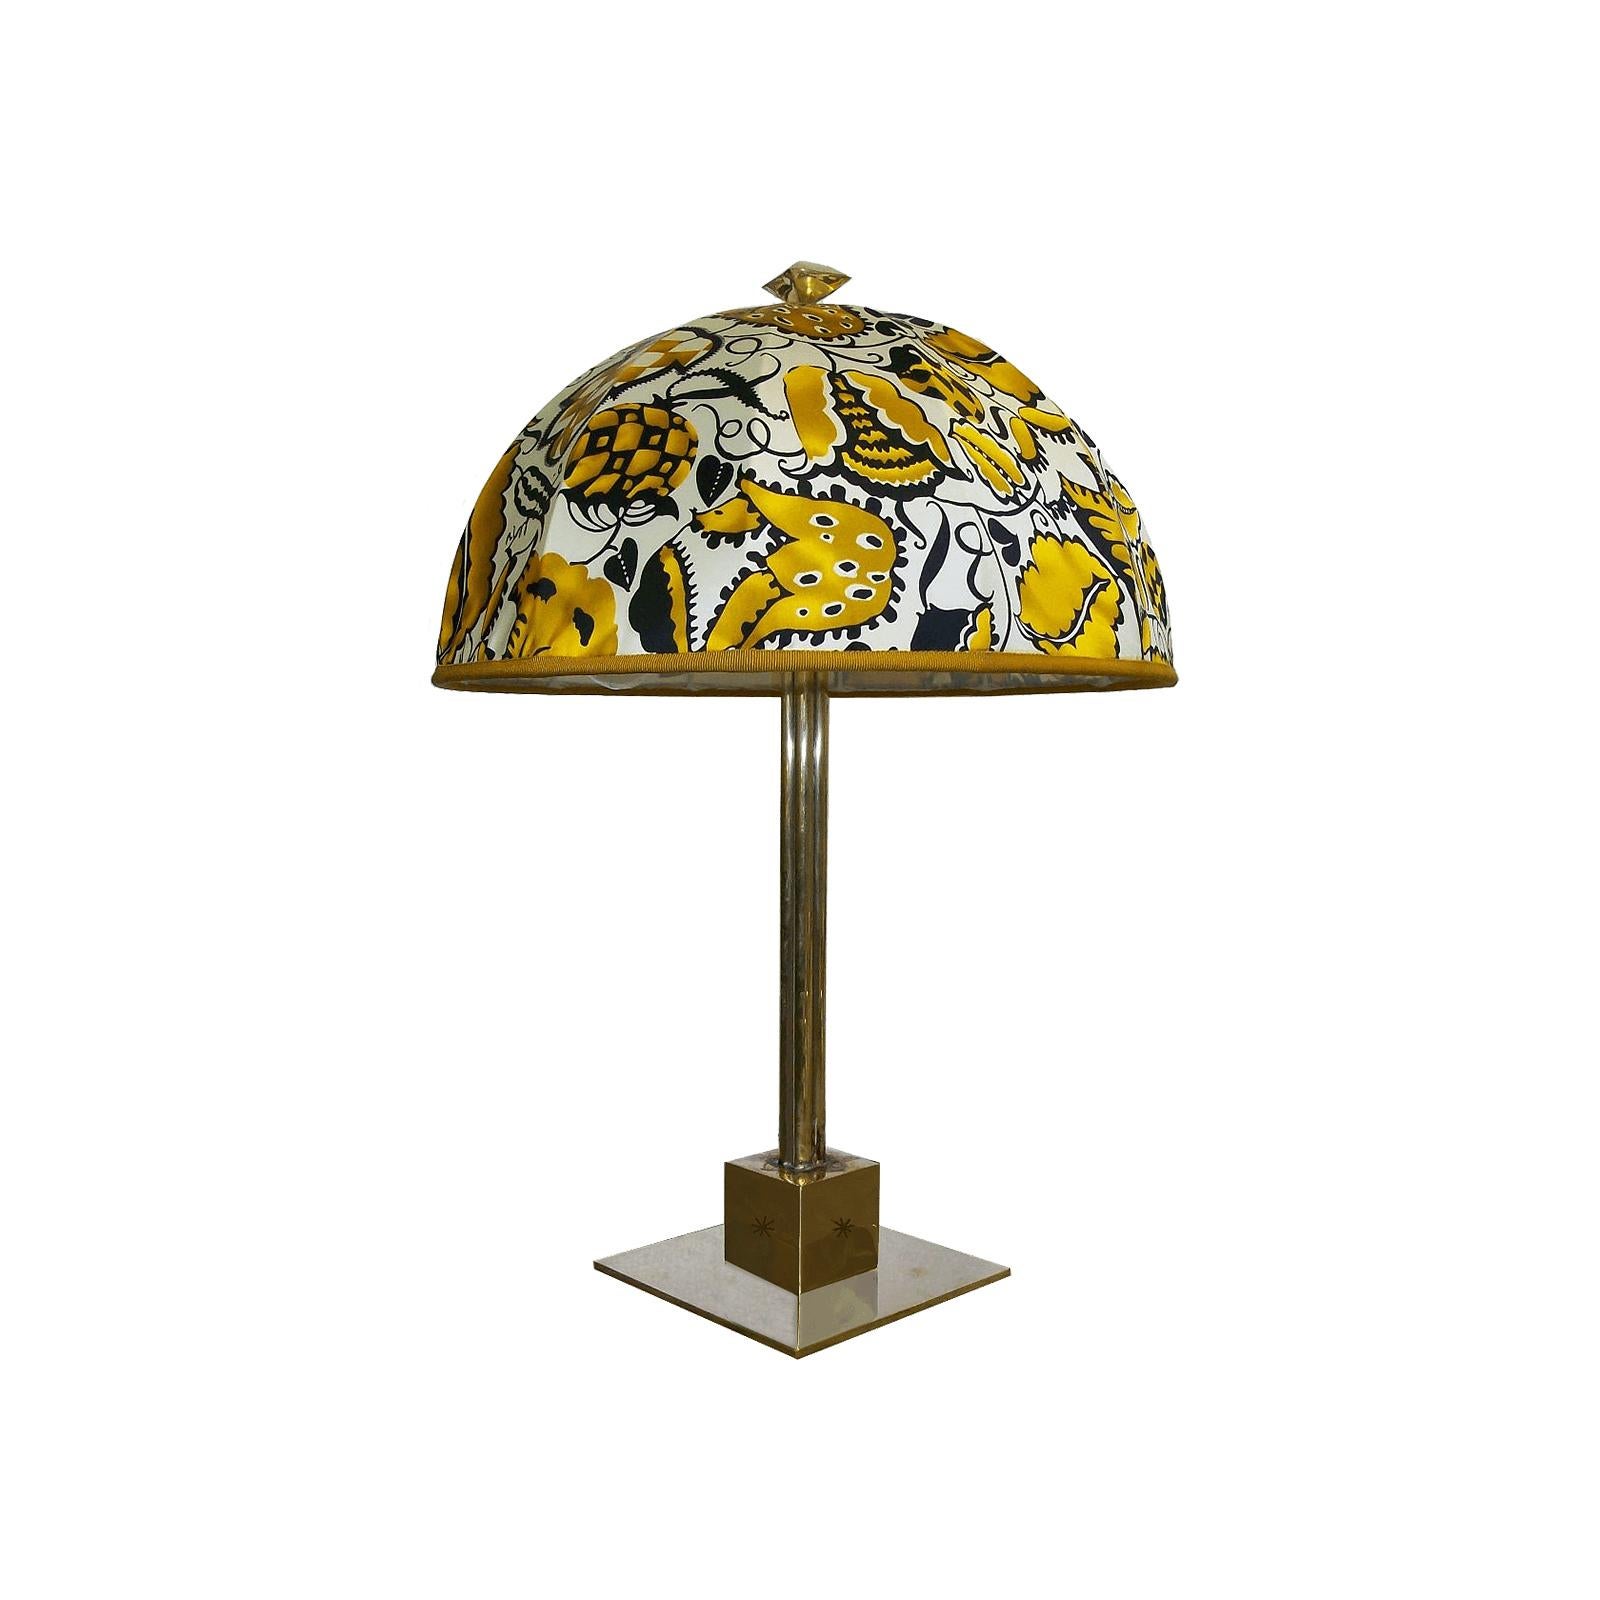 Austrian Table Lamp Jugendstil Secession Style Wiener Werkstaette, Dagobert Peche Edition For Sale